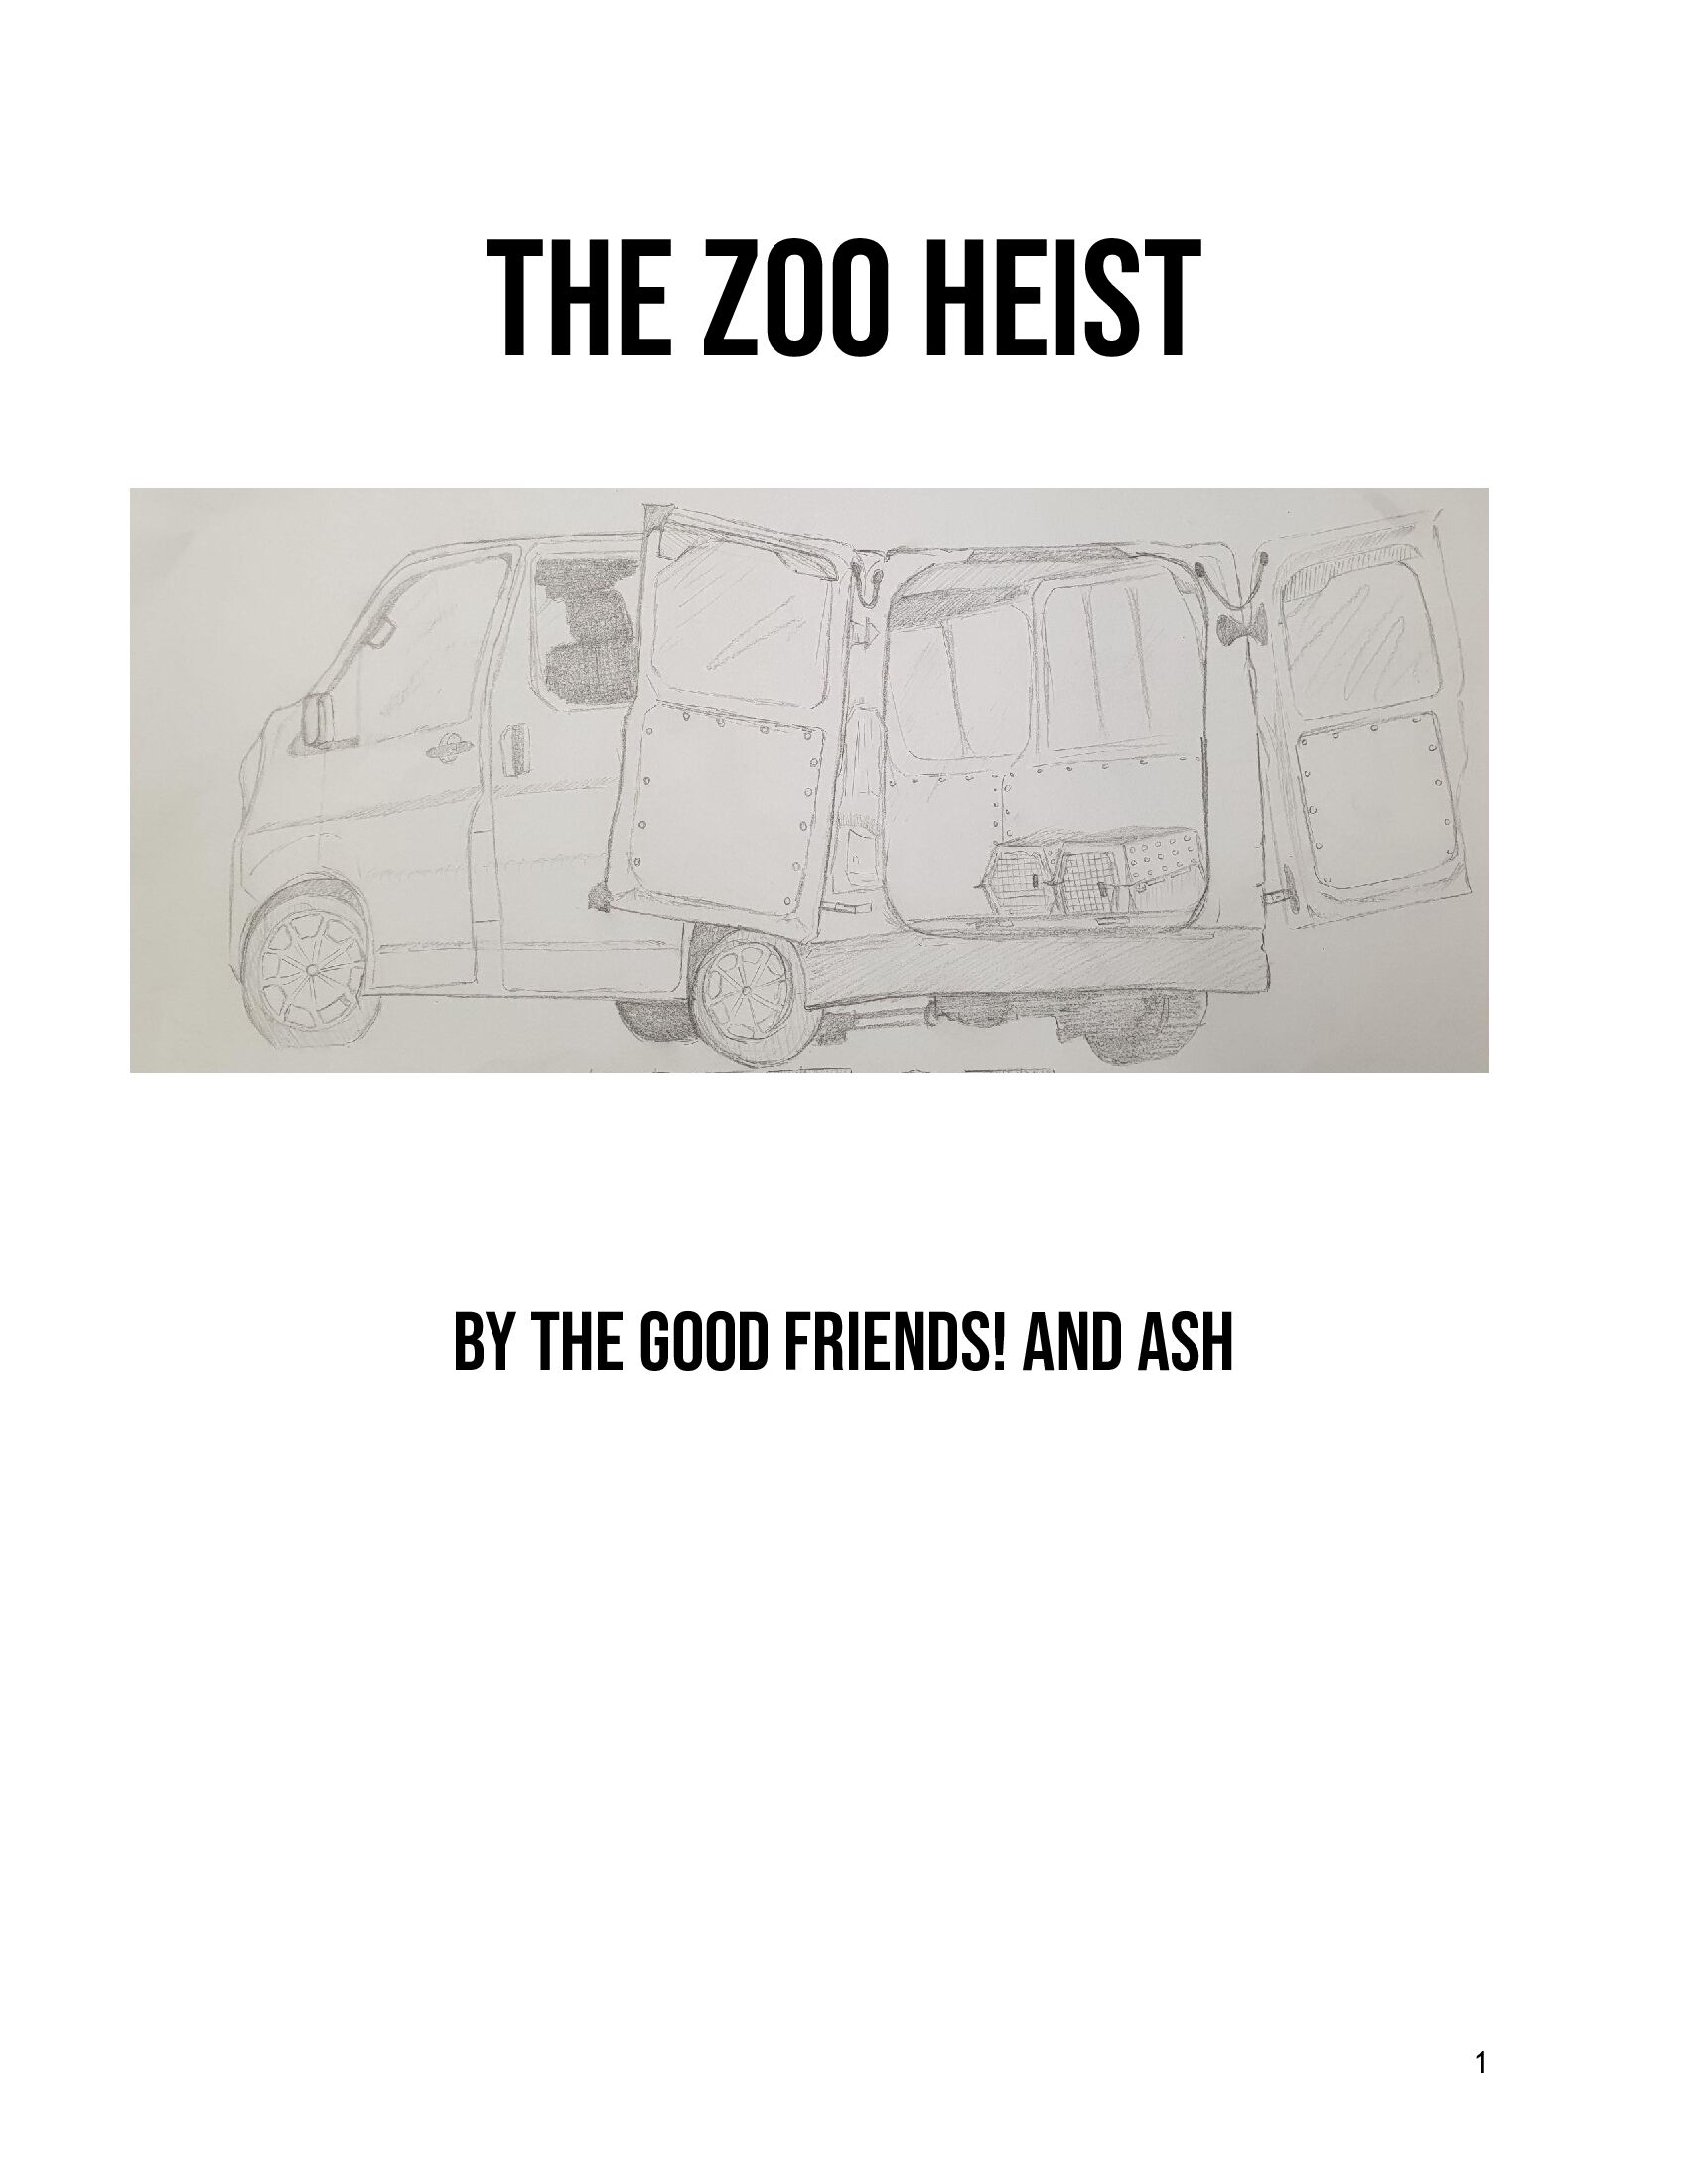 The Zoo Heist